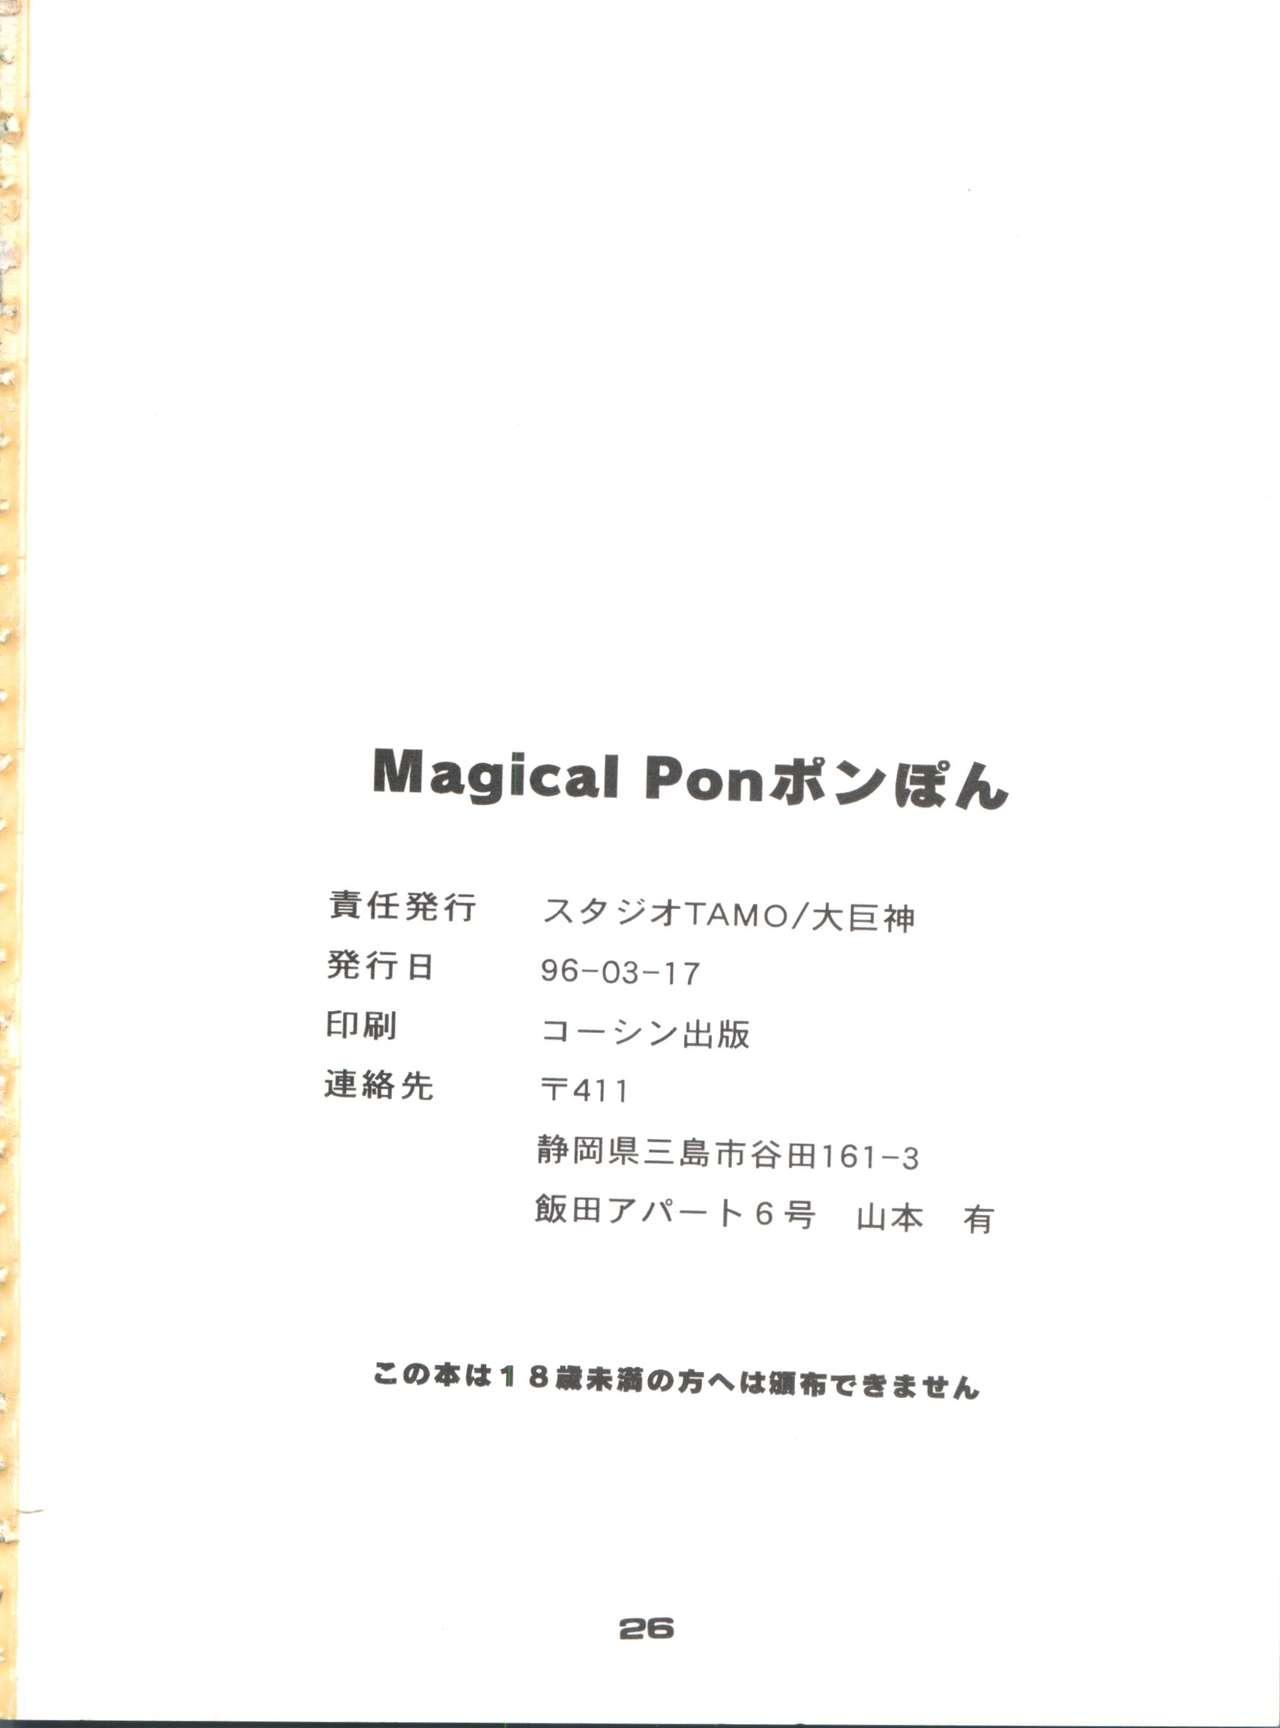 Chupando Magical Ponponpon Returns - Magical emi Pmv - Page 25